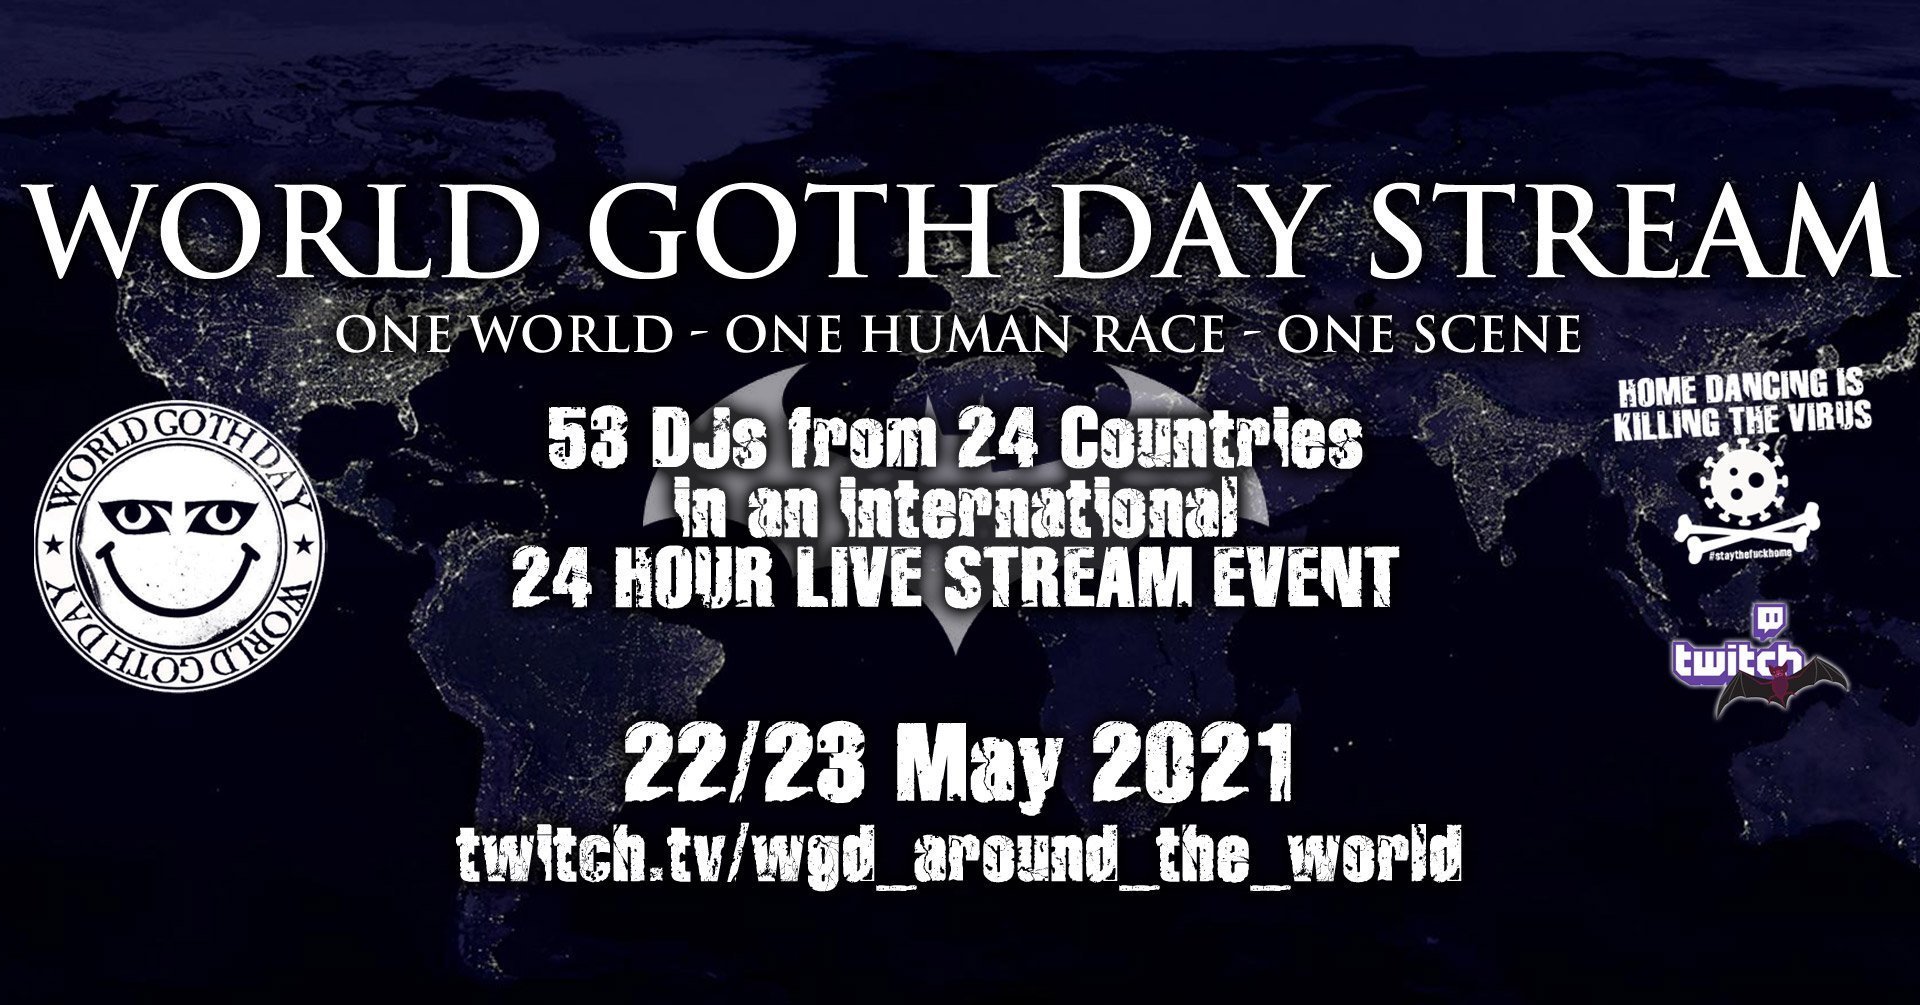 World Goth Day Stream 2021 Prague EVENTLAND Events, Things to do